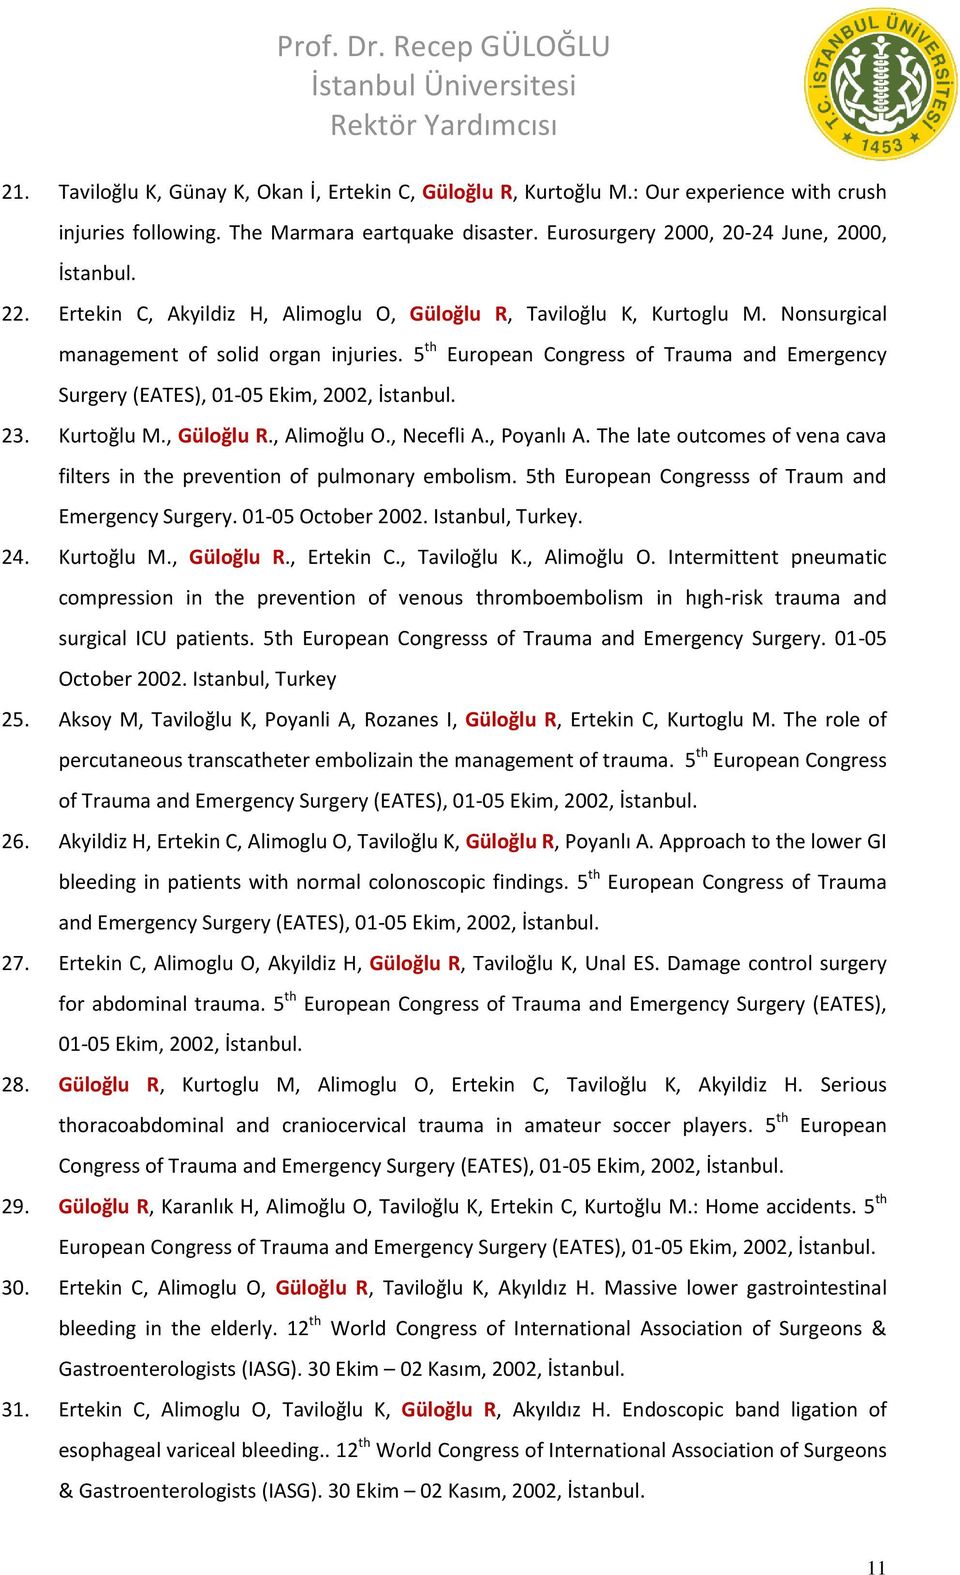 European Congress of Trauma and Emergency 23. Kurtoğlu M., Güloğlu R., Alimoğlu O., Necefli A., Poyanlı A. The late outcomes of vena cava filters in the prevention of pulmonary embolism.